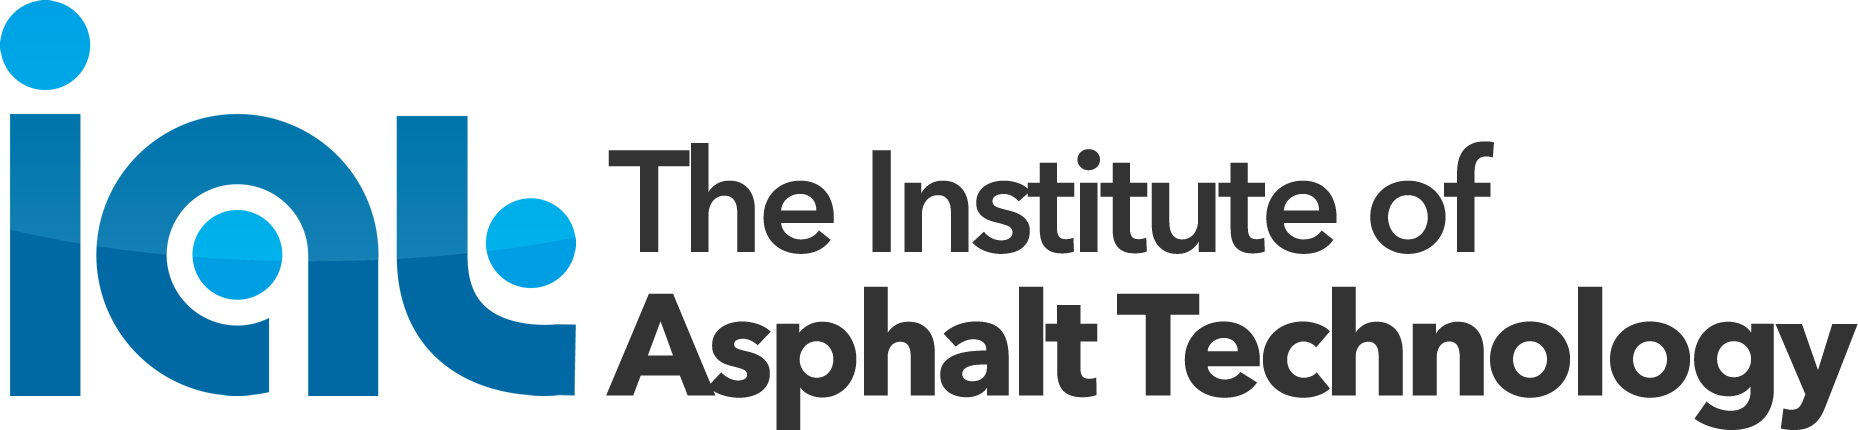 The Institute of Asphalt Technology